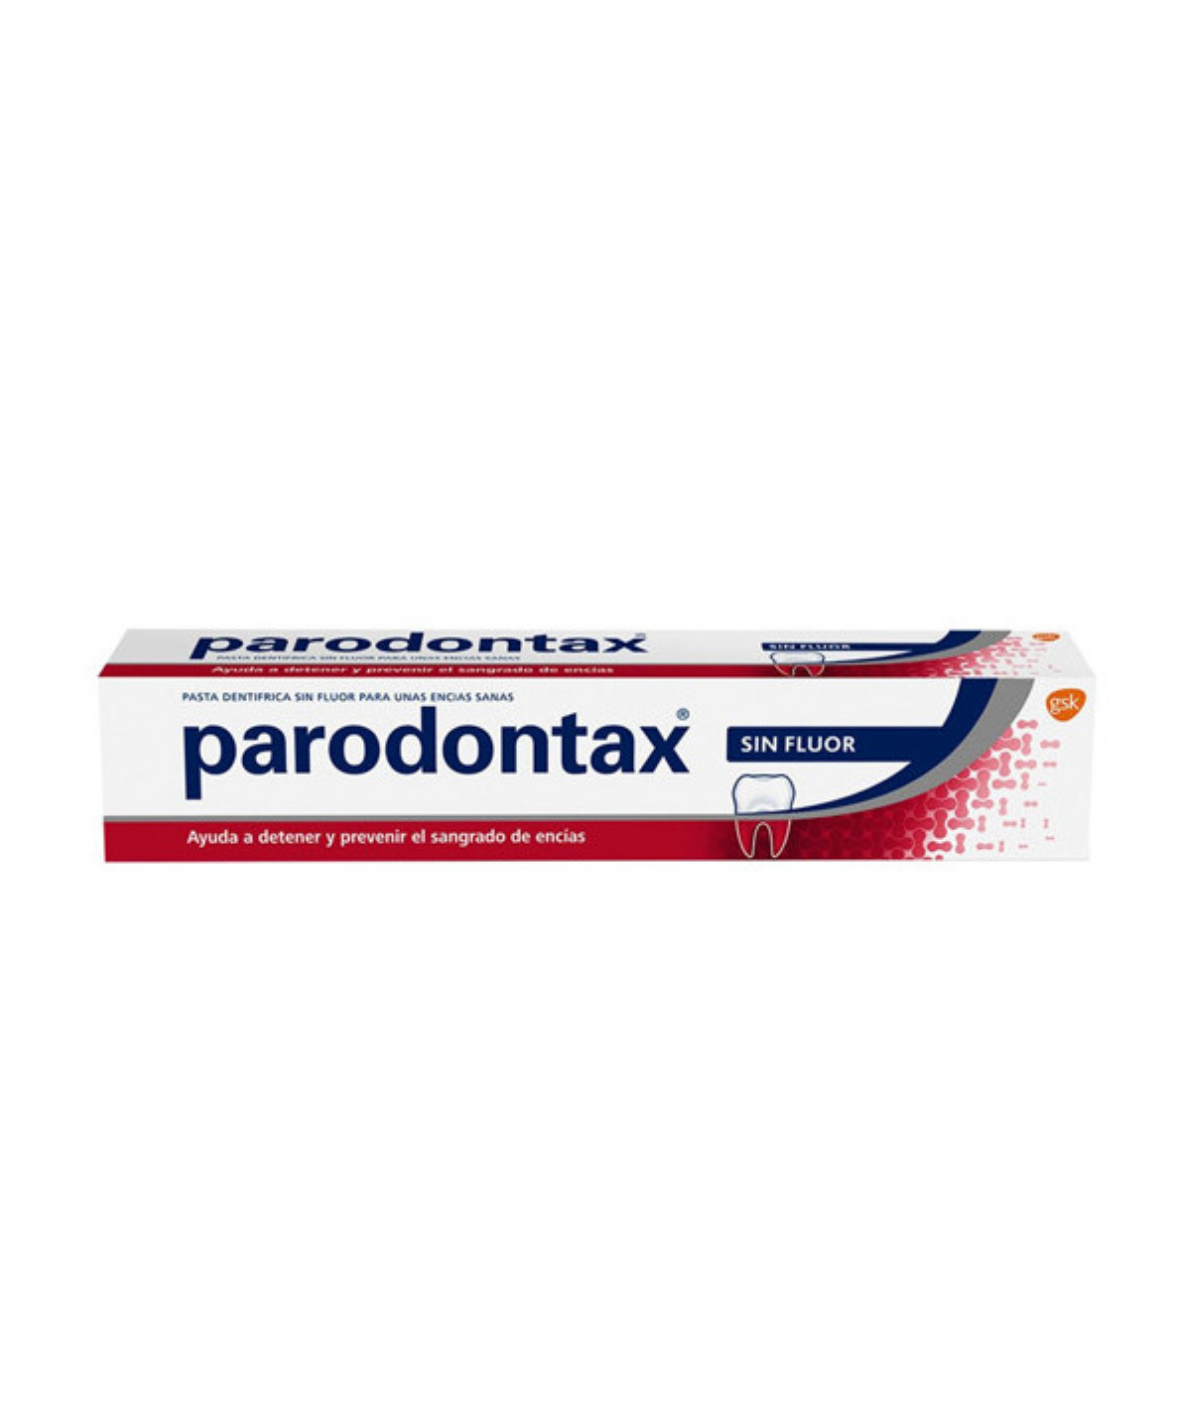 PARODONTAX ORIGINAL 75 ML